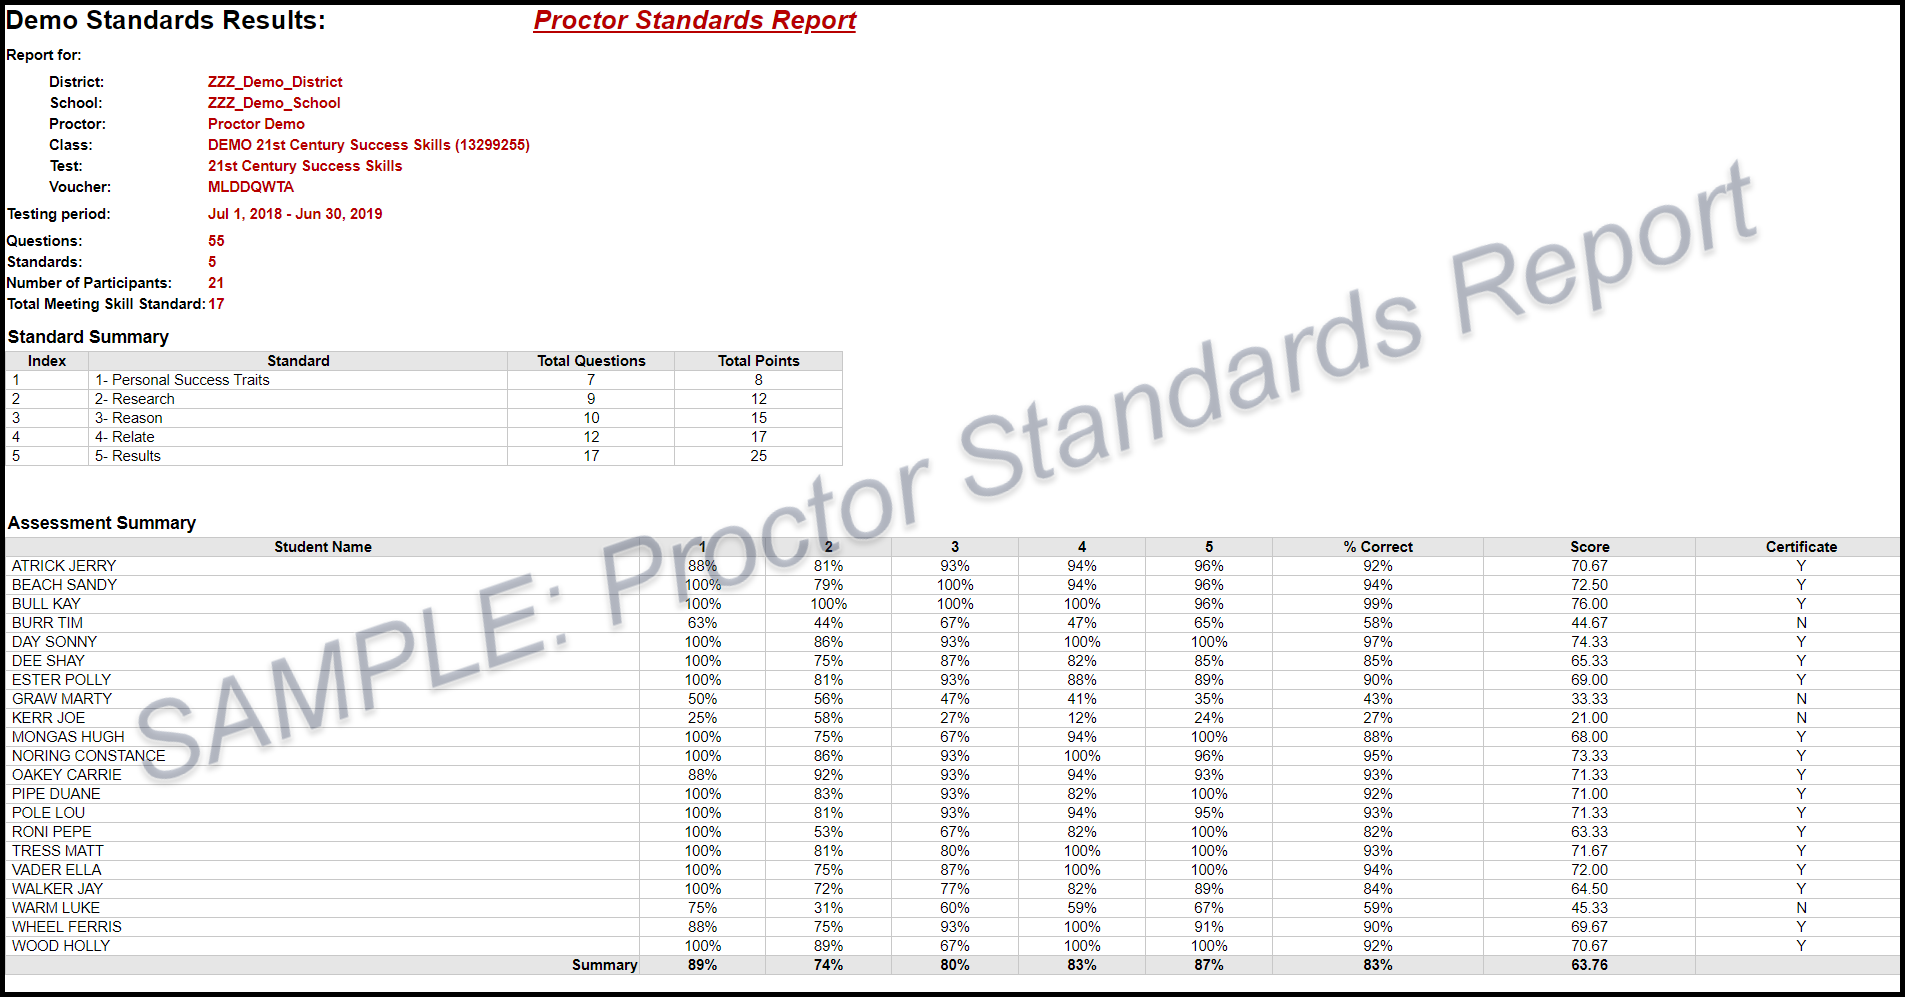 Sample Proctor Standards Report